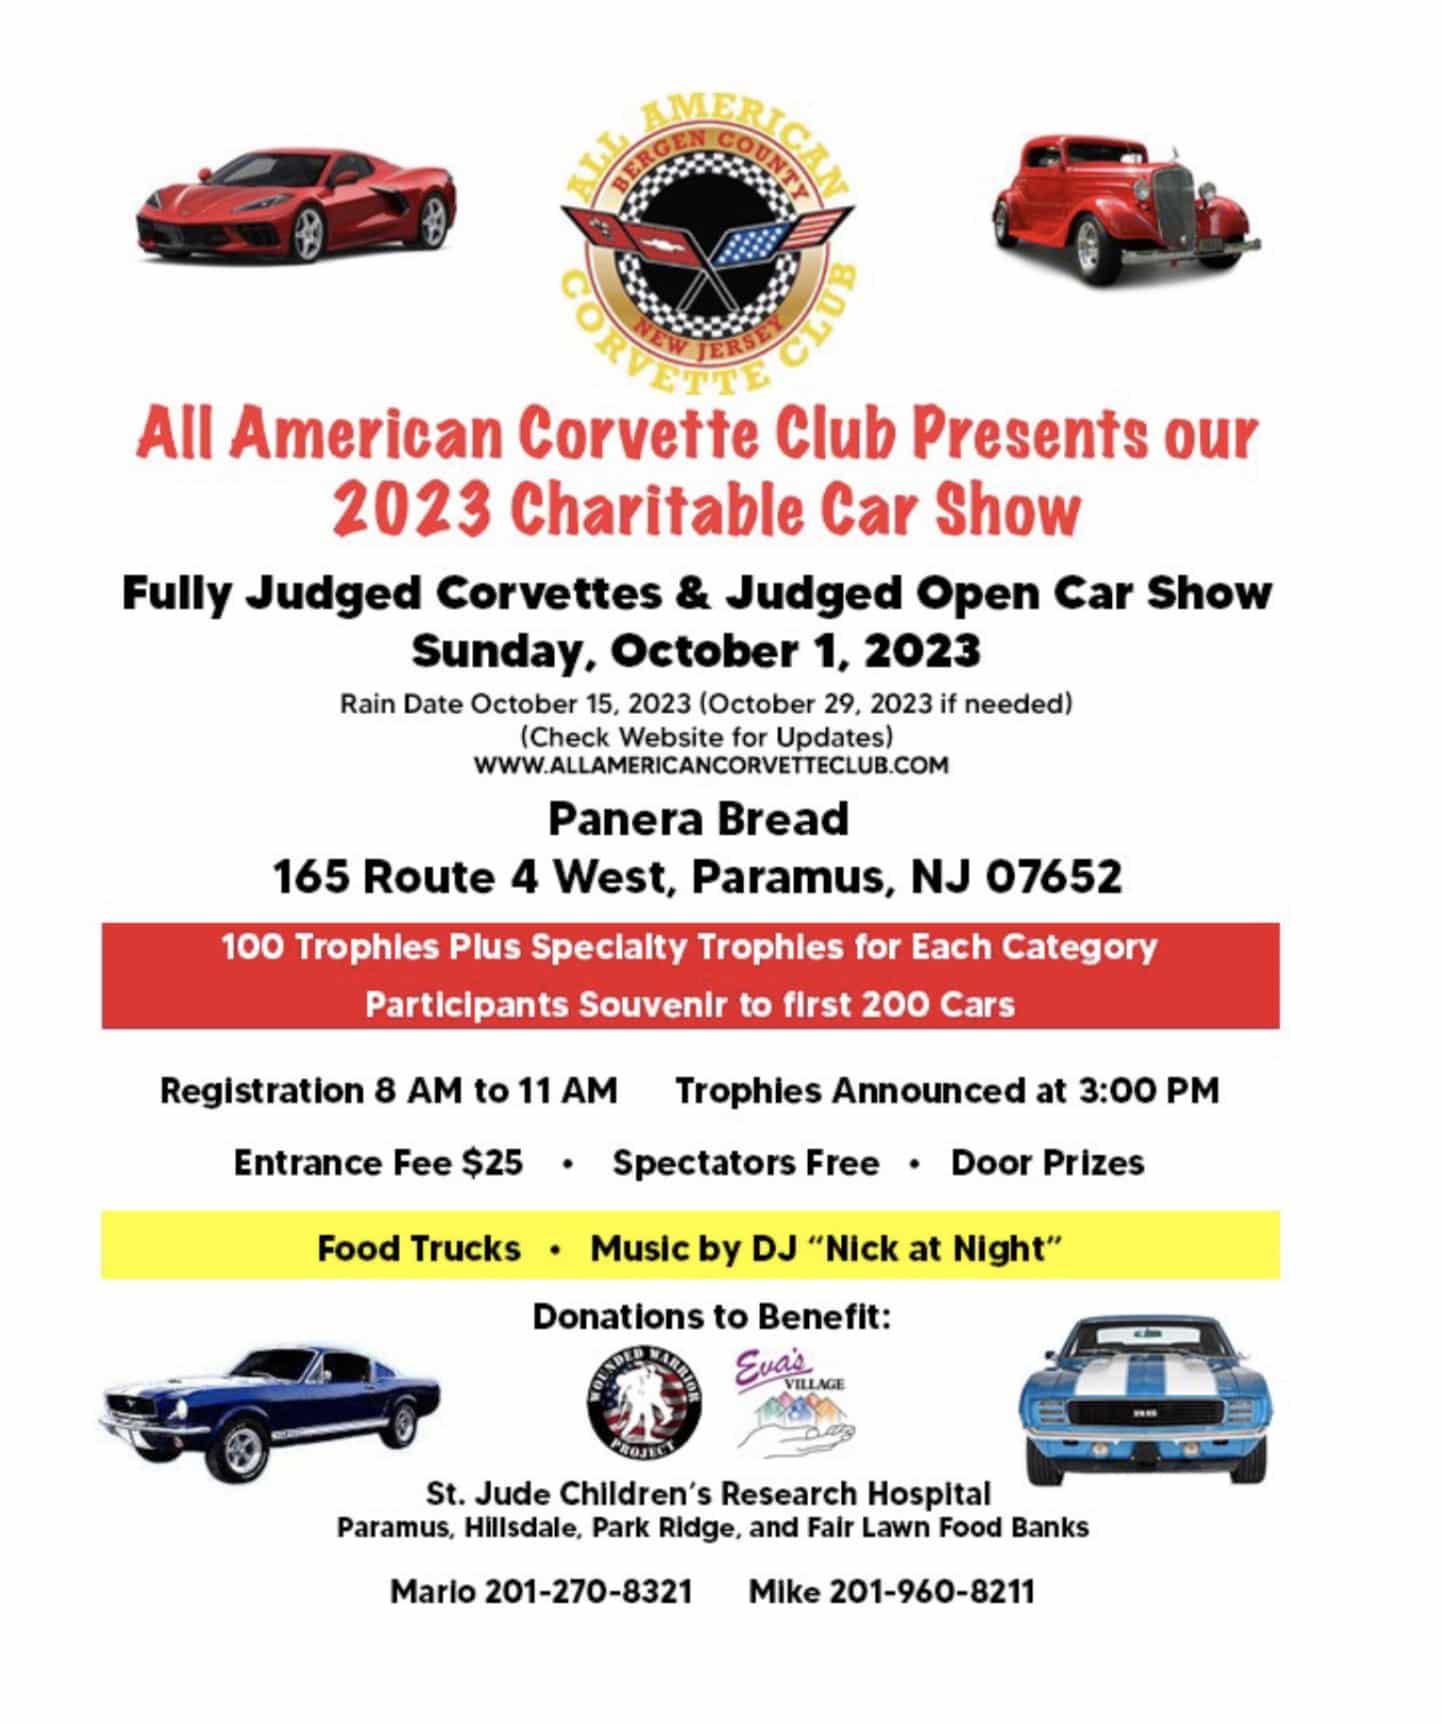 All American Corvette Club Car Show 2023